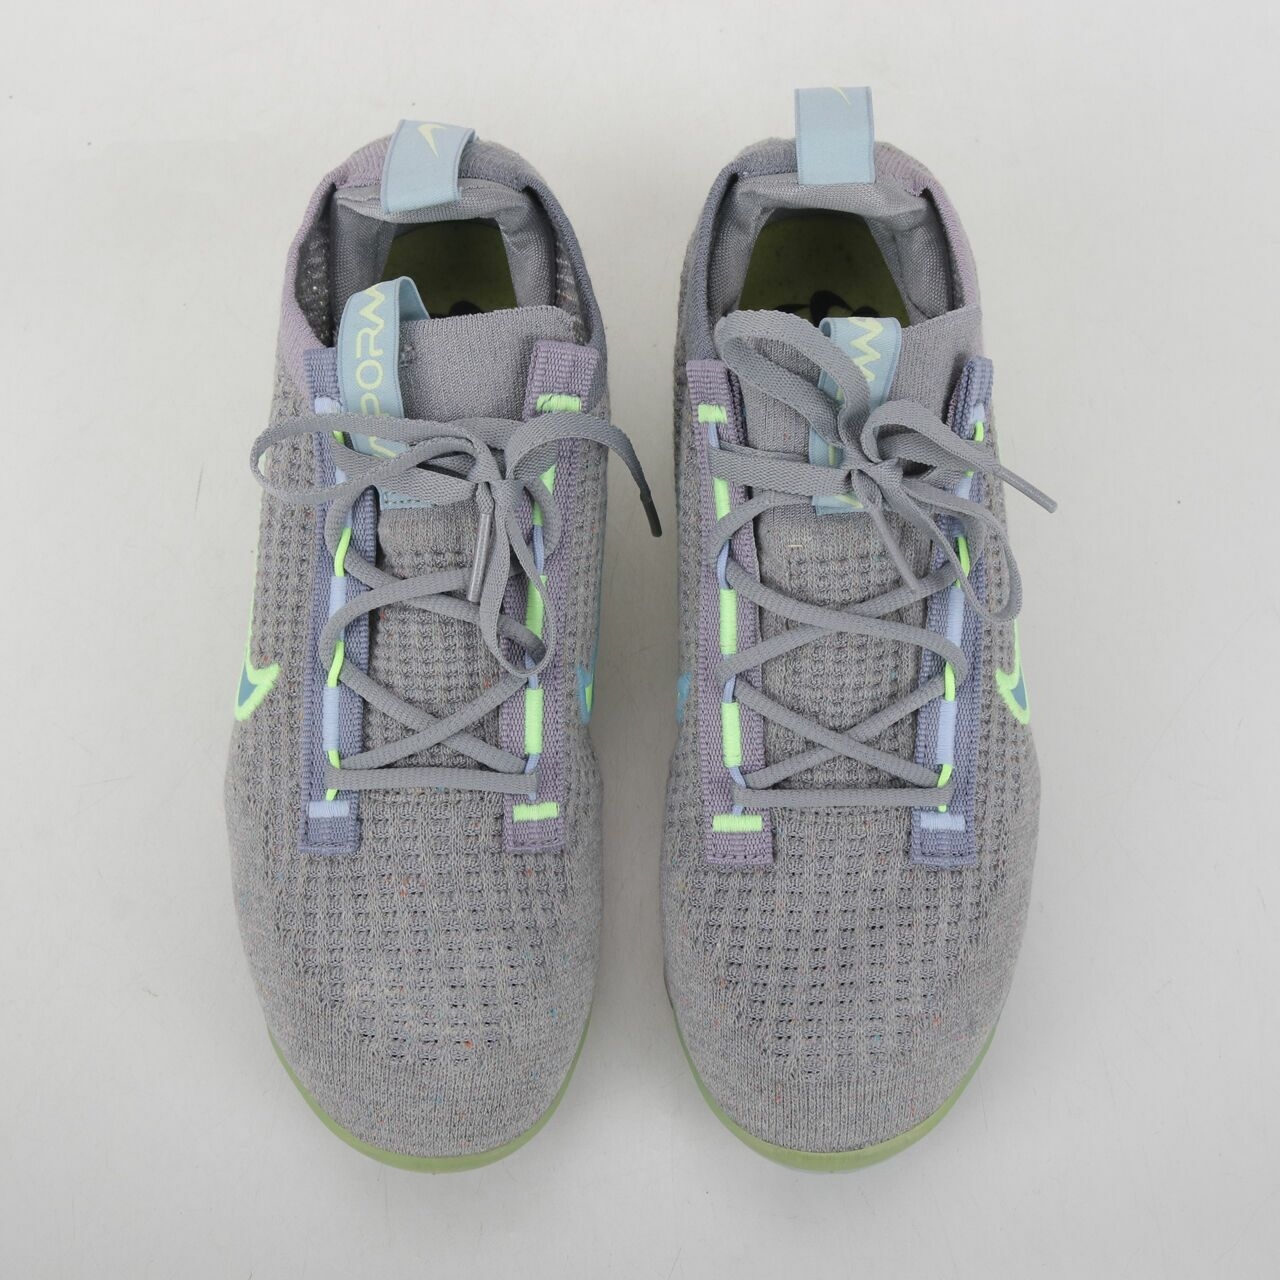 Nike Air Vapormax Particle Grey Shoes